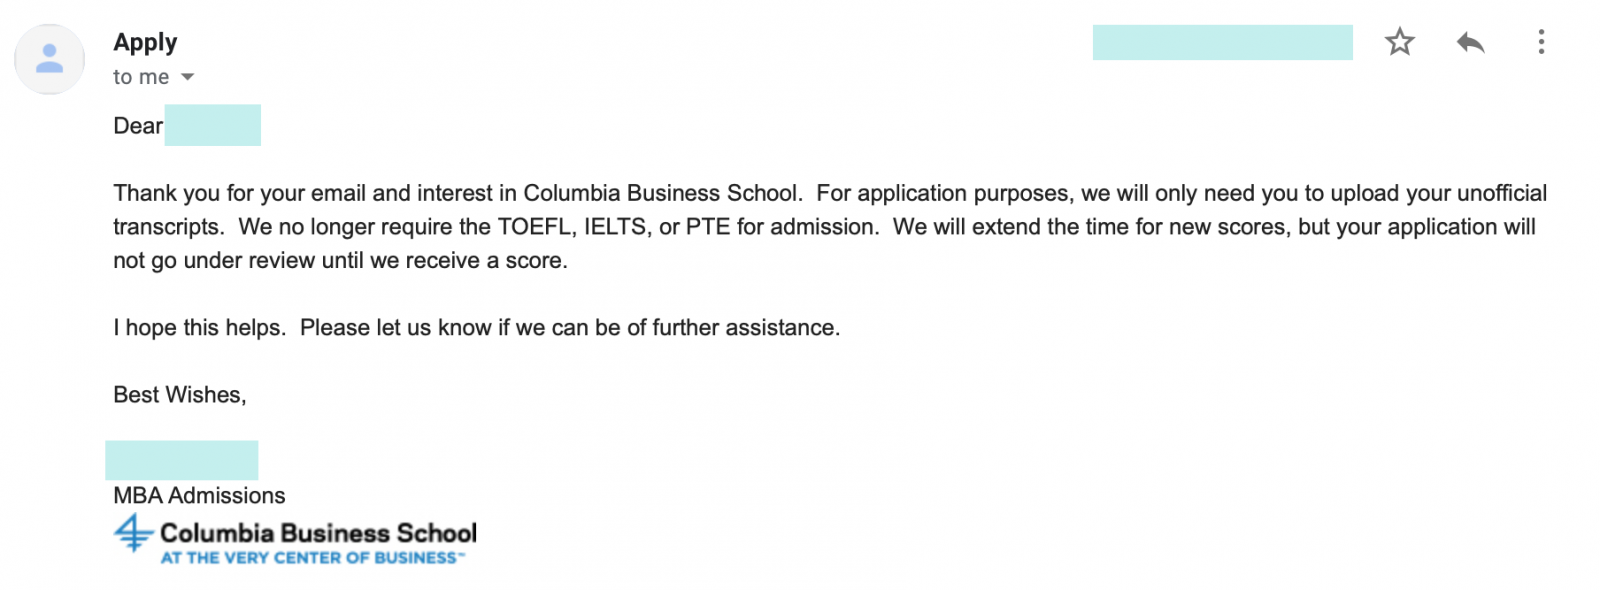 columbia business school - application